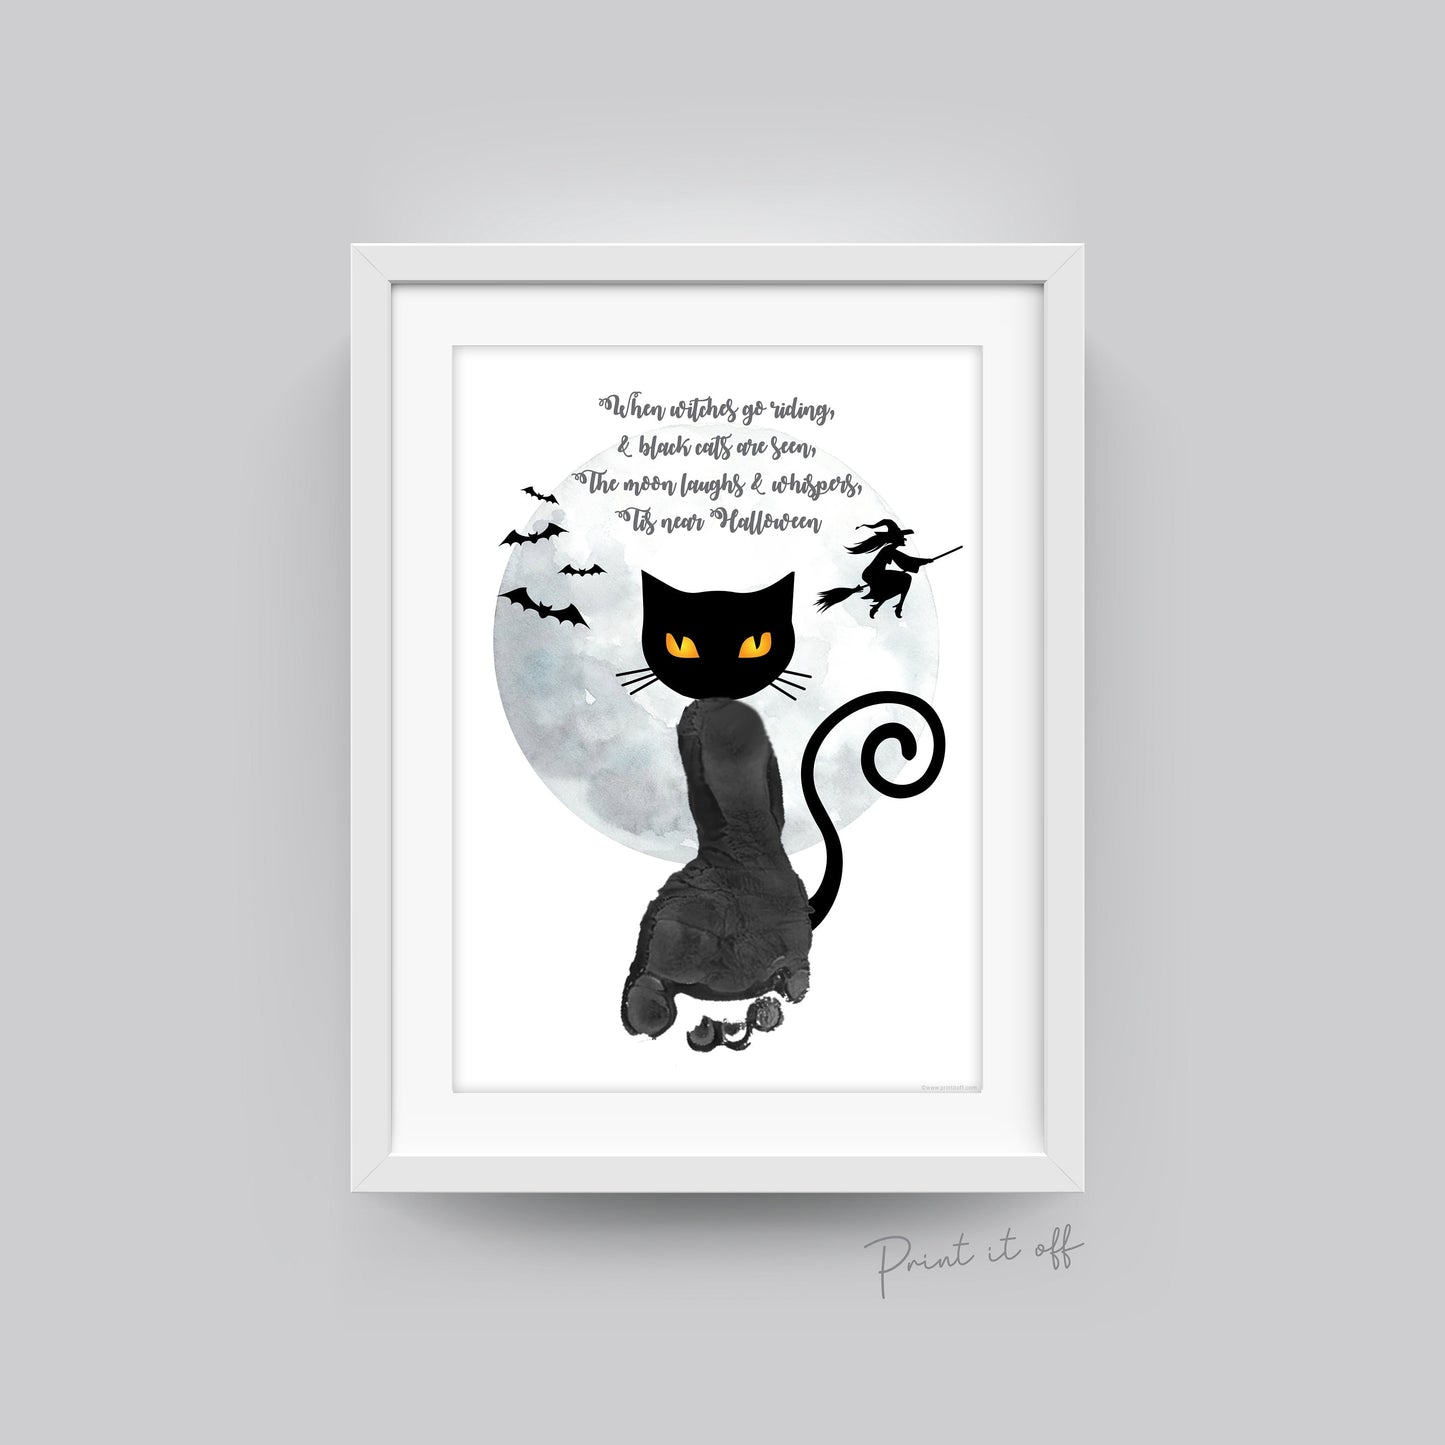 Halloween Footprint Handprint Art Craft / Black Cat Witch Poem / Kids Toddler Baby Card Memory Activity Keepsake DIY / Print It Off  0582